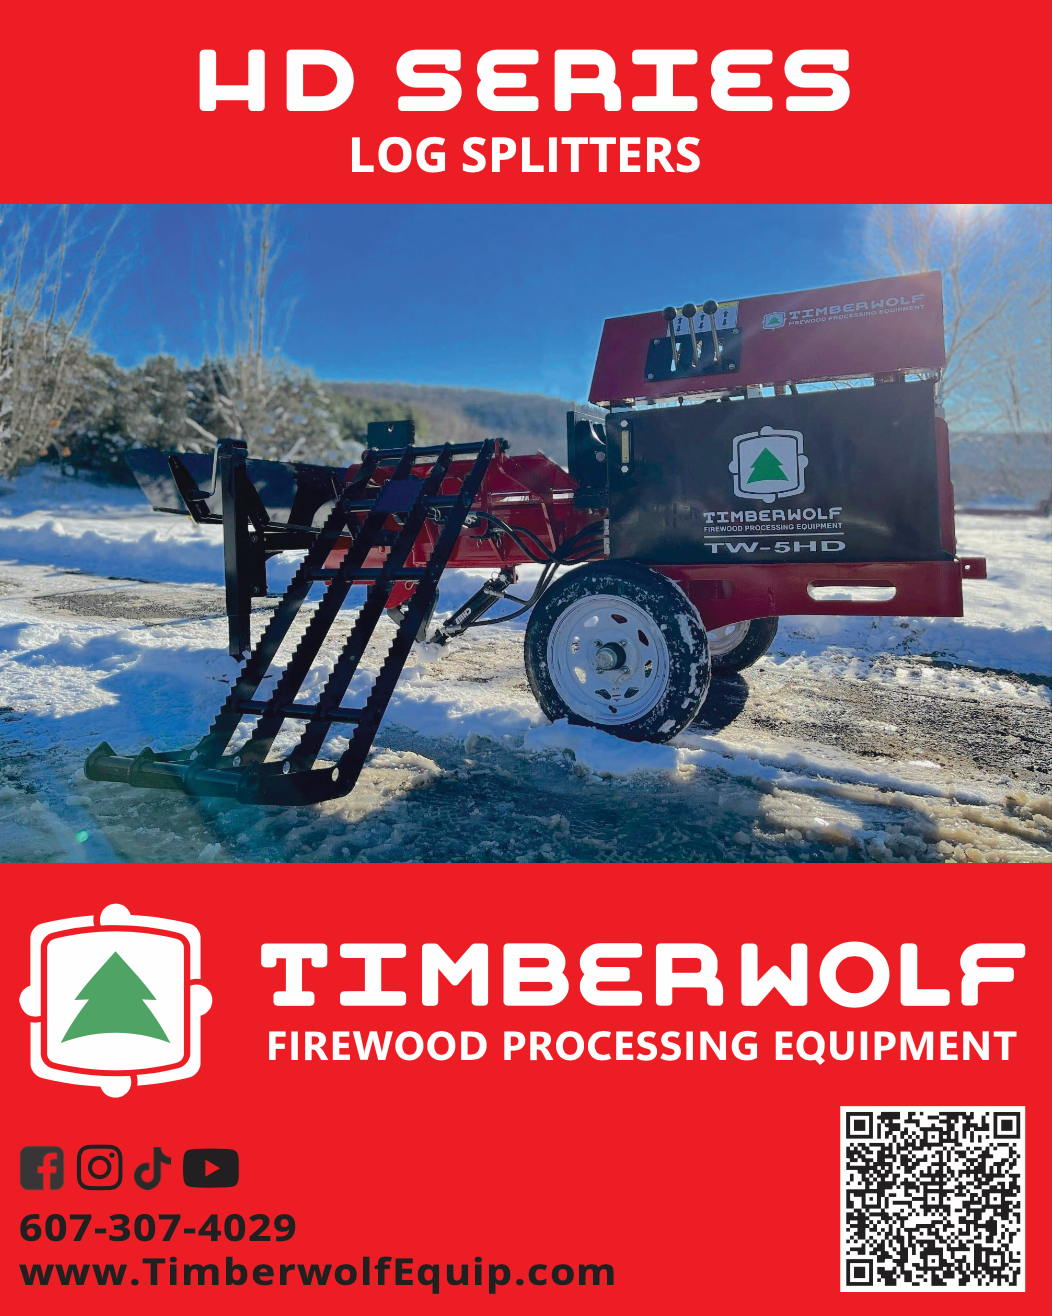 Timberwolf Firewood Processing Equipment HD Series Log Splitters Technical Specifications Brochure Download